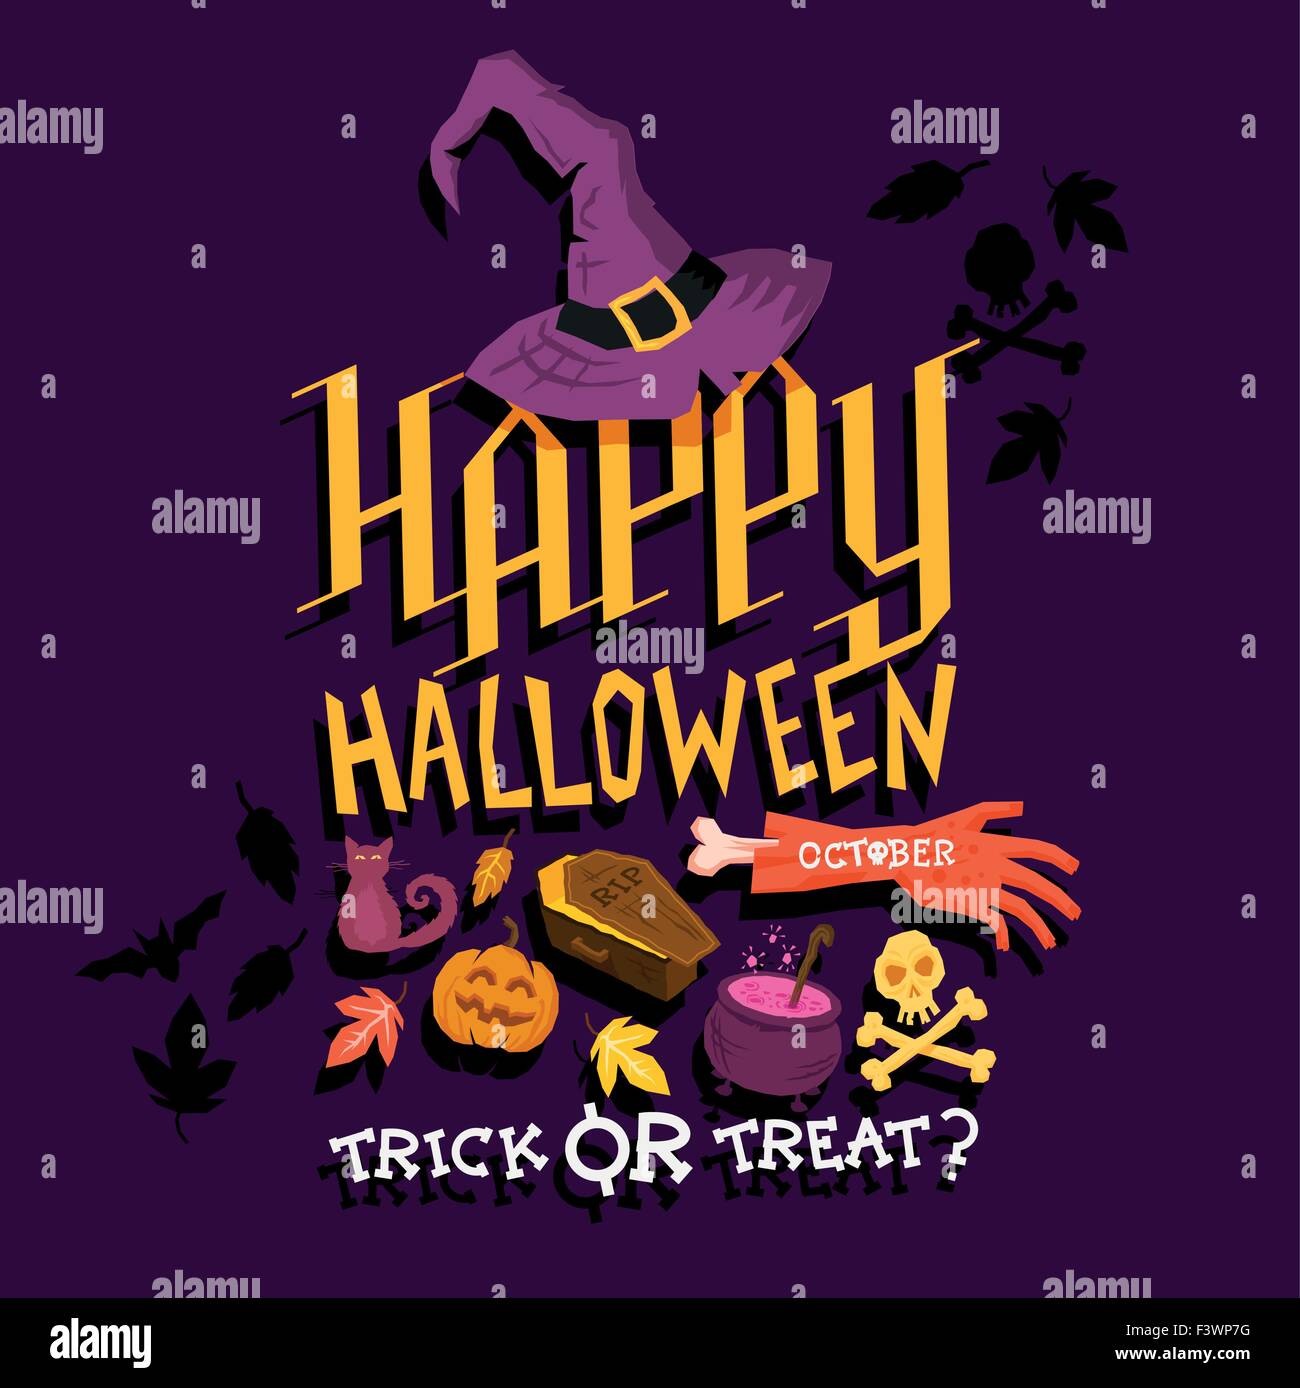 Spooky Halloween party design poster. Happy Halloween! Illustrazione Vettoriale Illustrazione Vettoriale